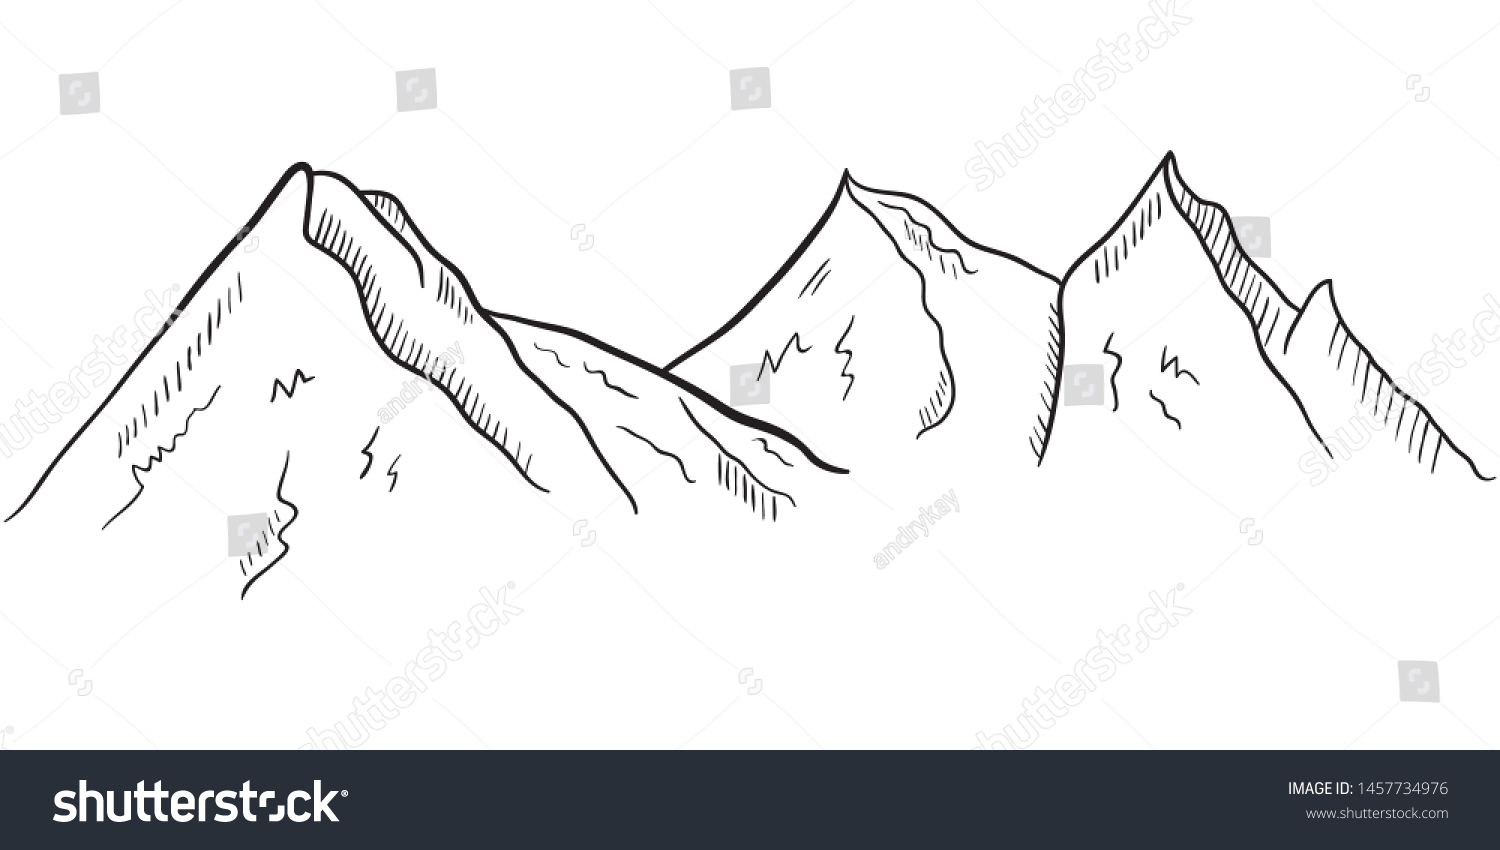 4,976 Rocky mountain sketch Images, Stock Photos & Vectors | Shutterstock